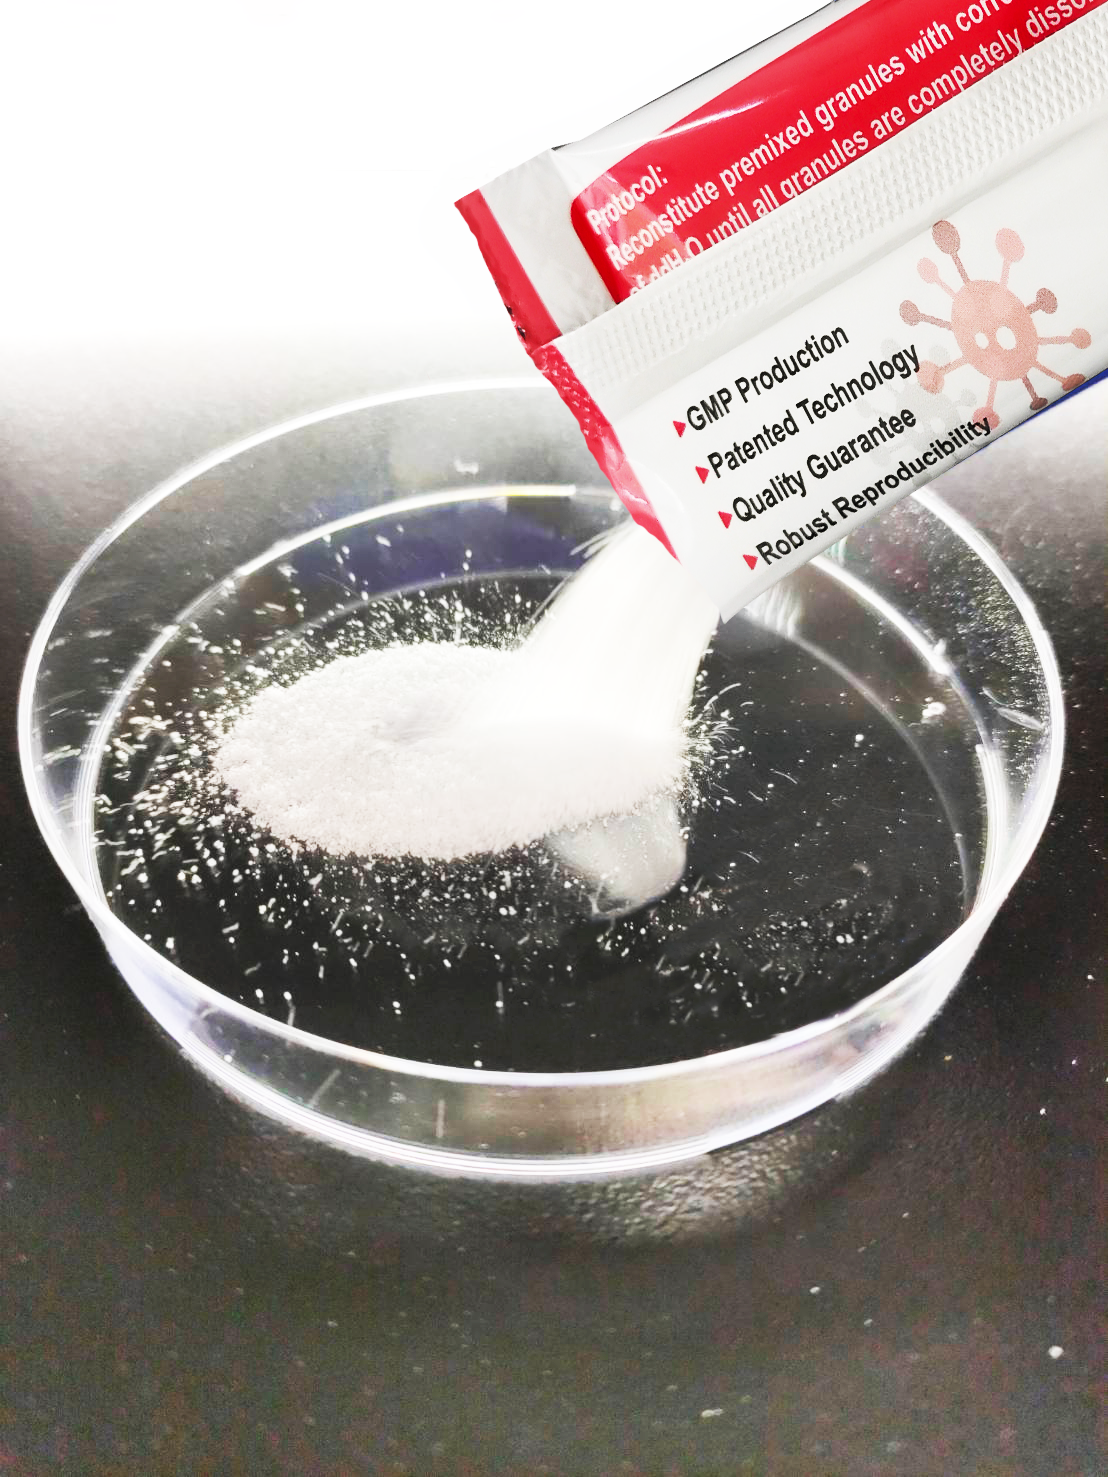 ACElute™ SSC Instant Granules, pH7.0, 1L/pk